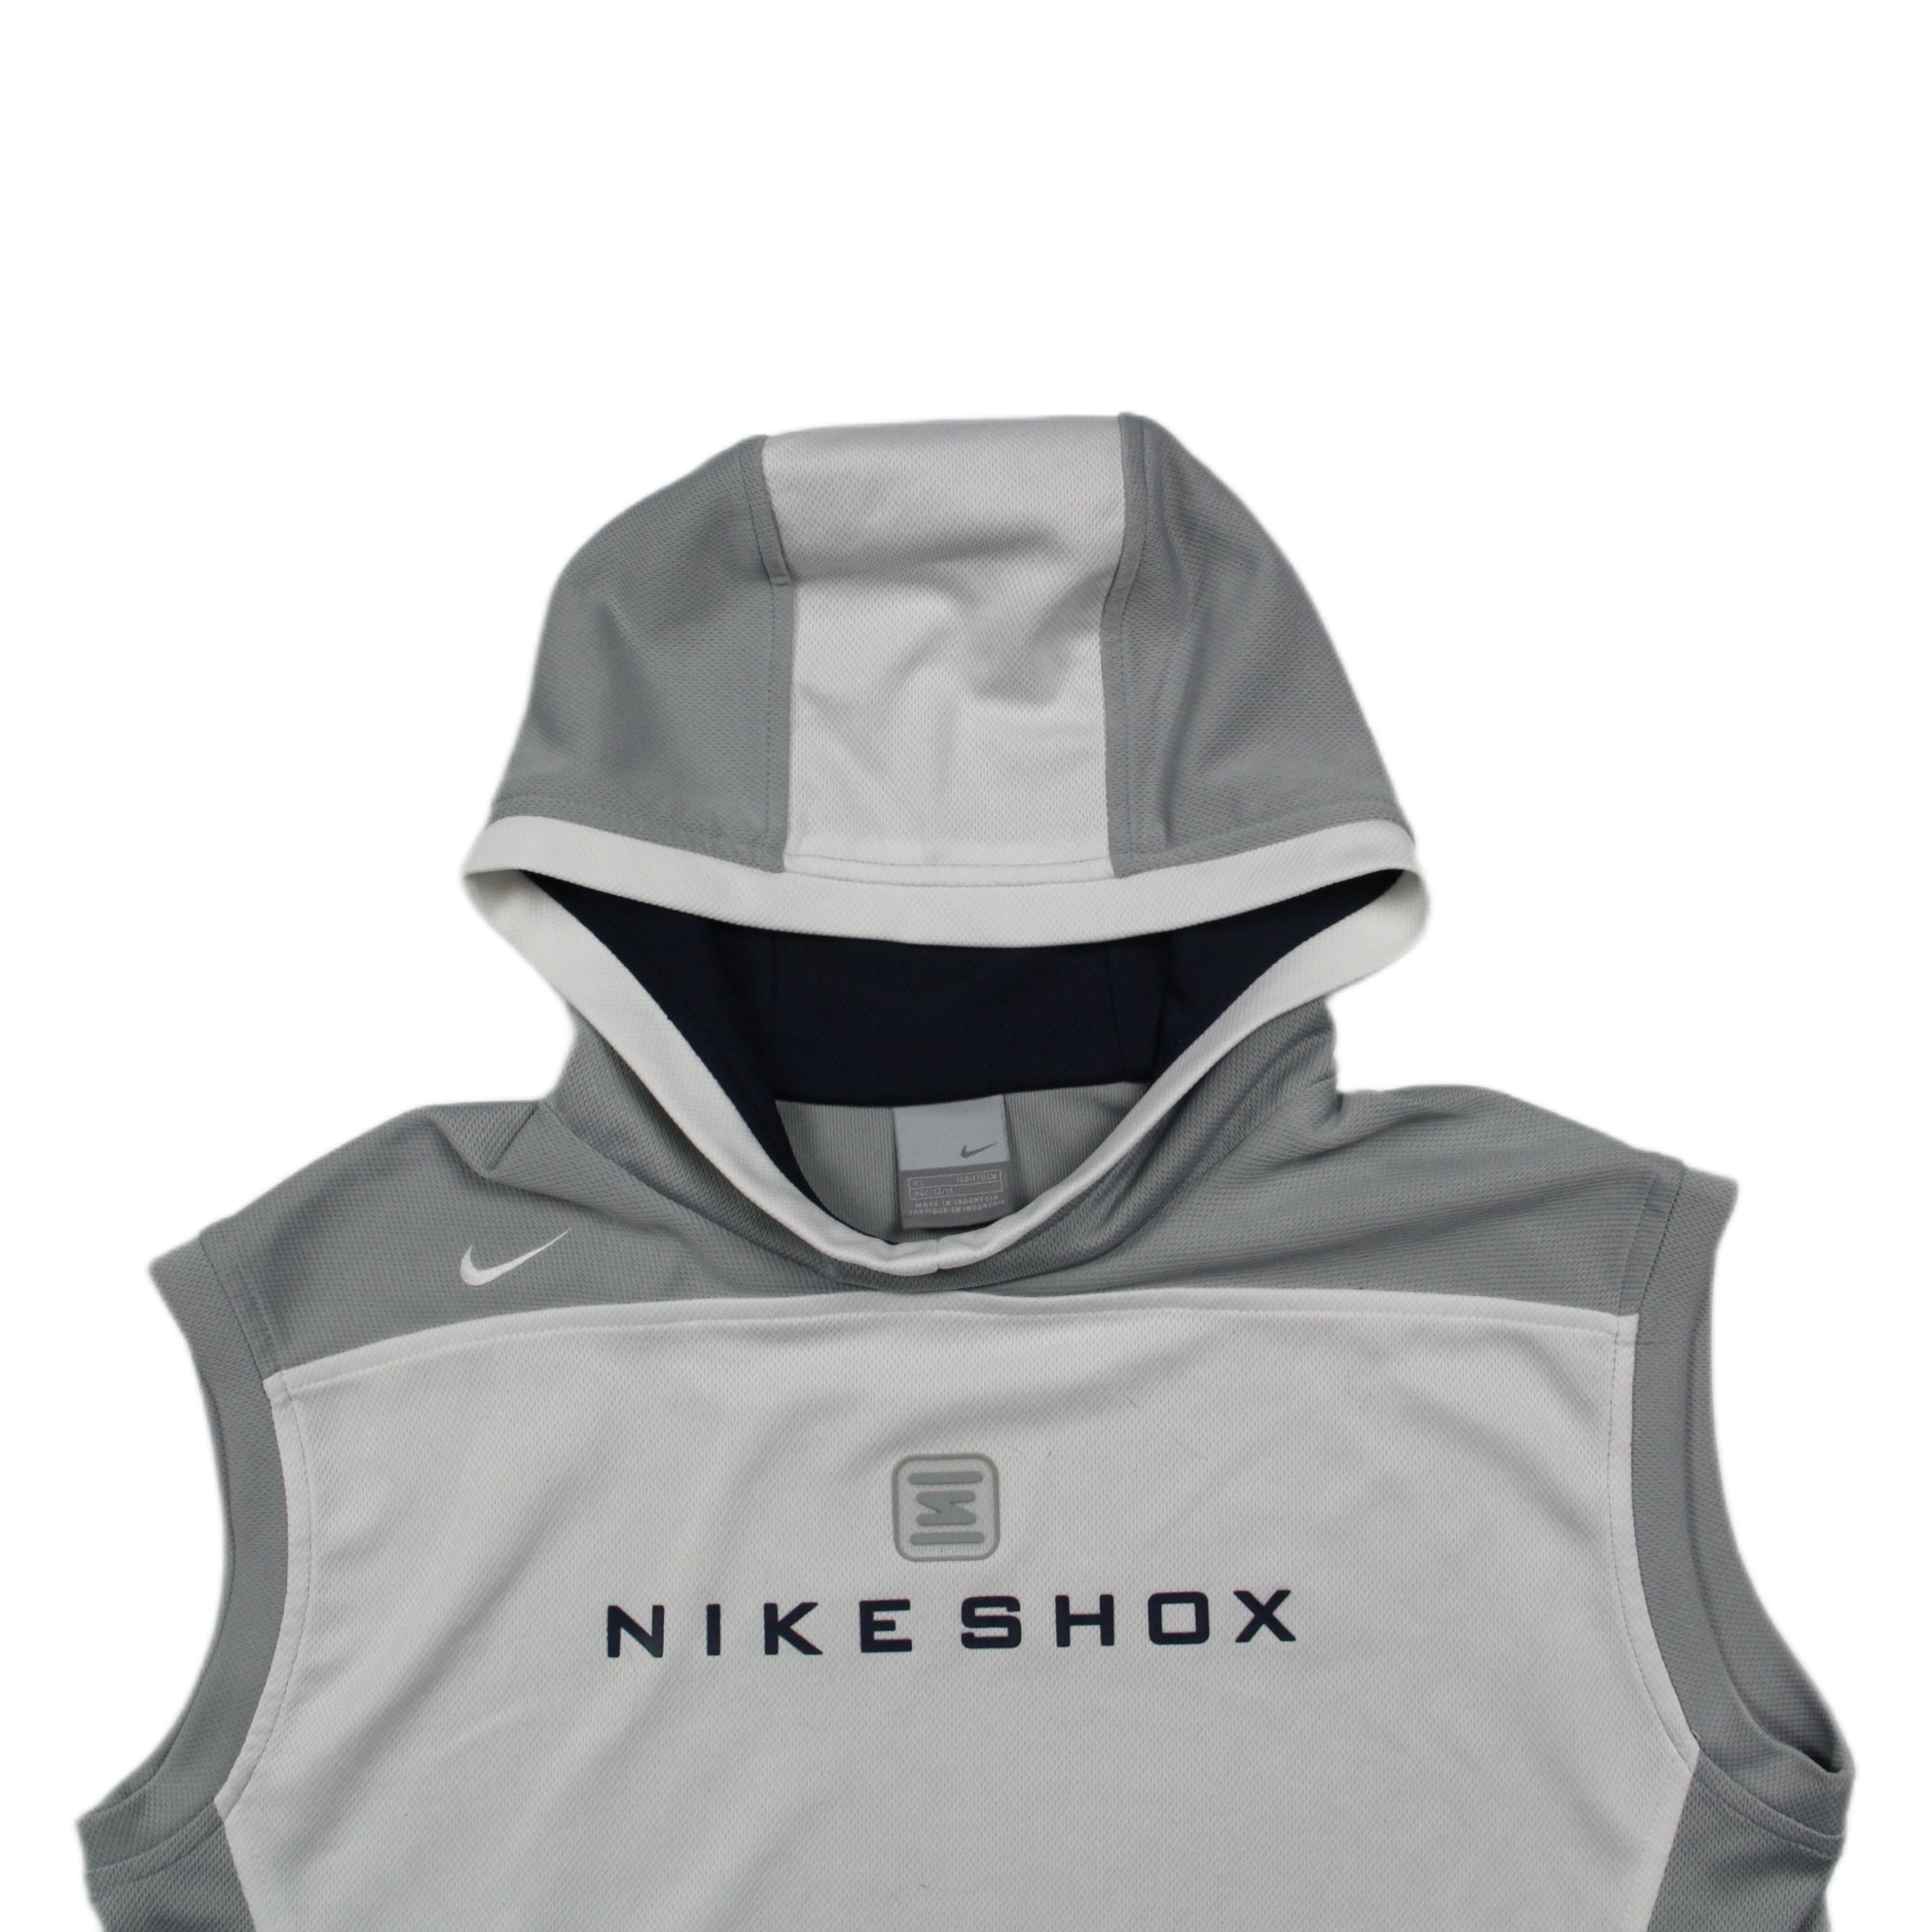 Nike Shox Hooded Tanktop white grey neon green – SECONDCHANCE-EU.COM